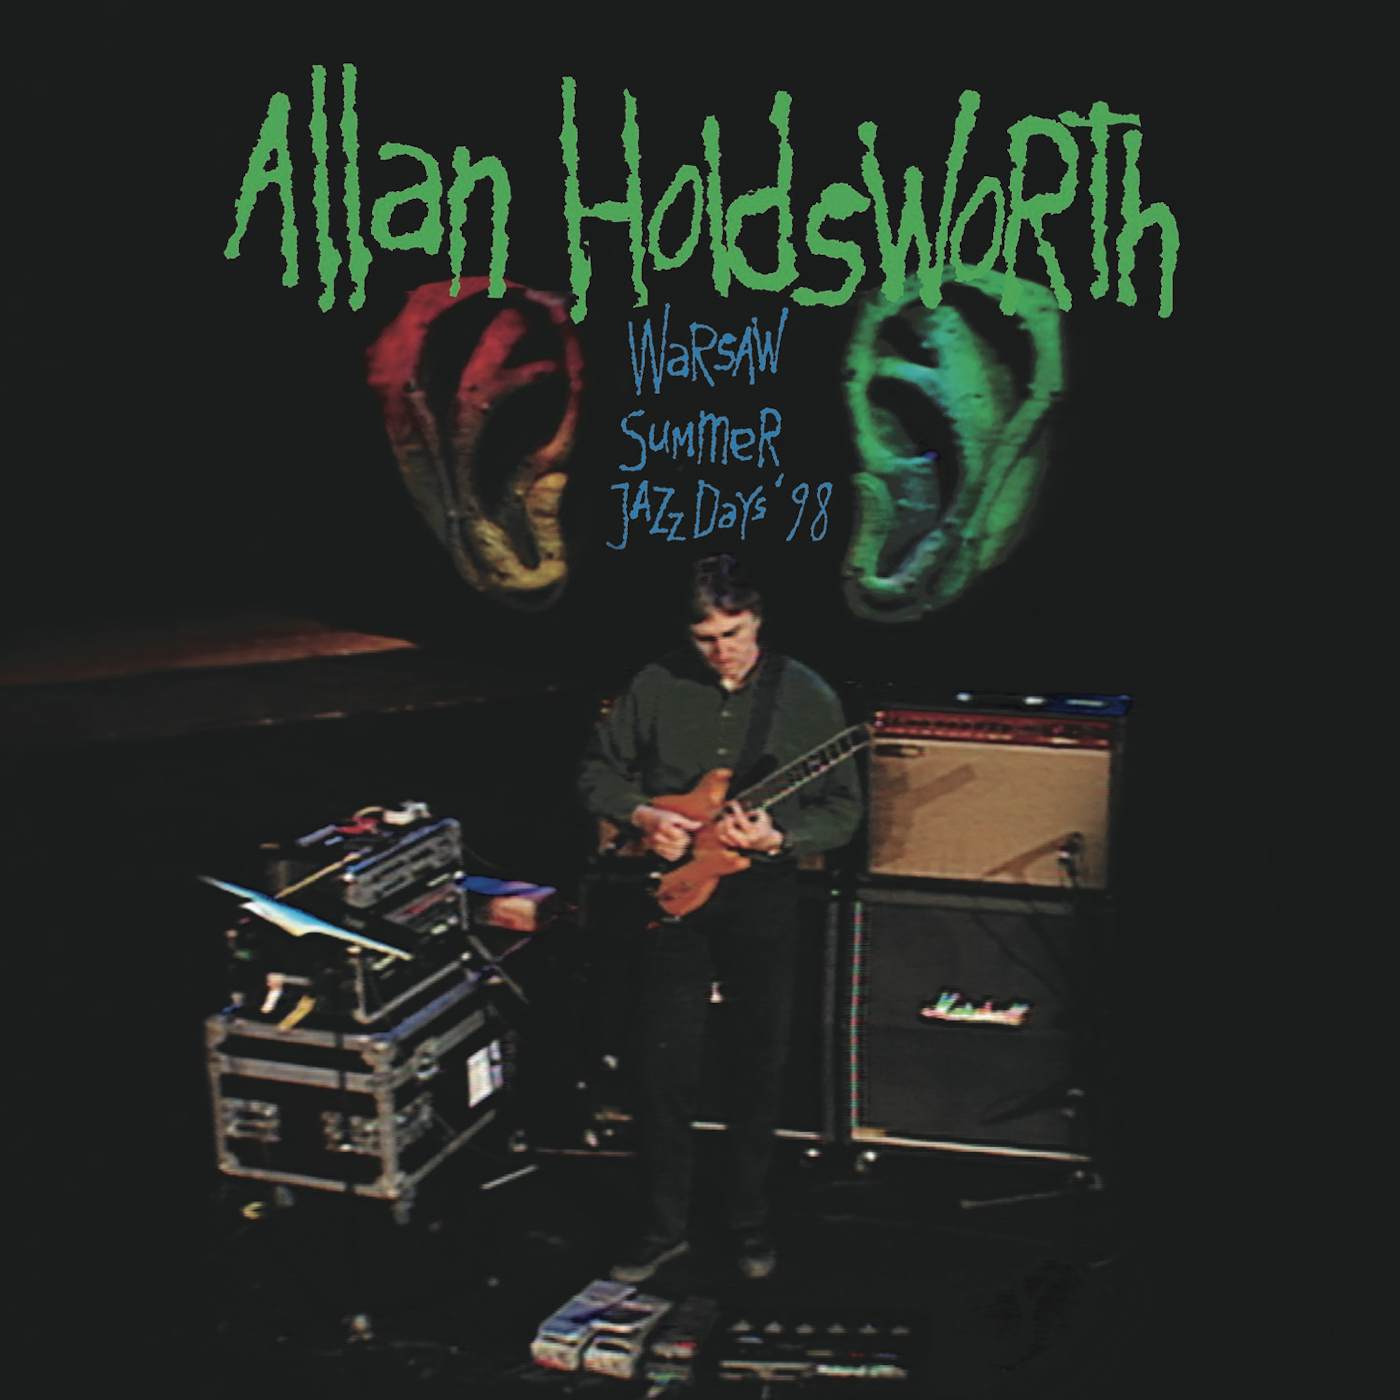 Allan Holdsworth WARSAW SUMMER JAZZ DAYS '98 CD